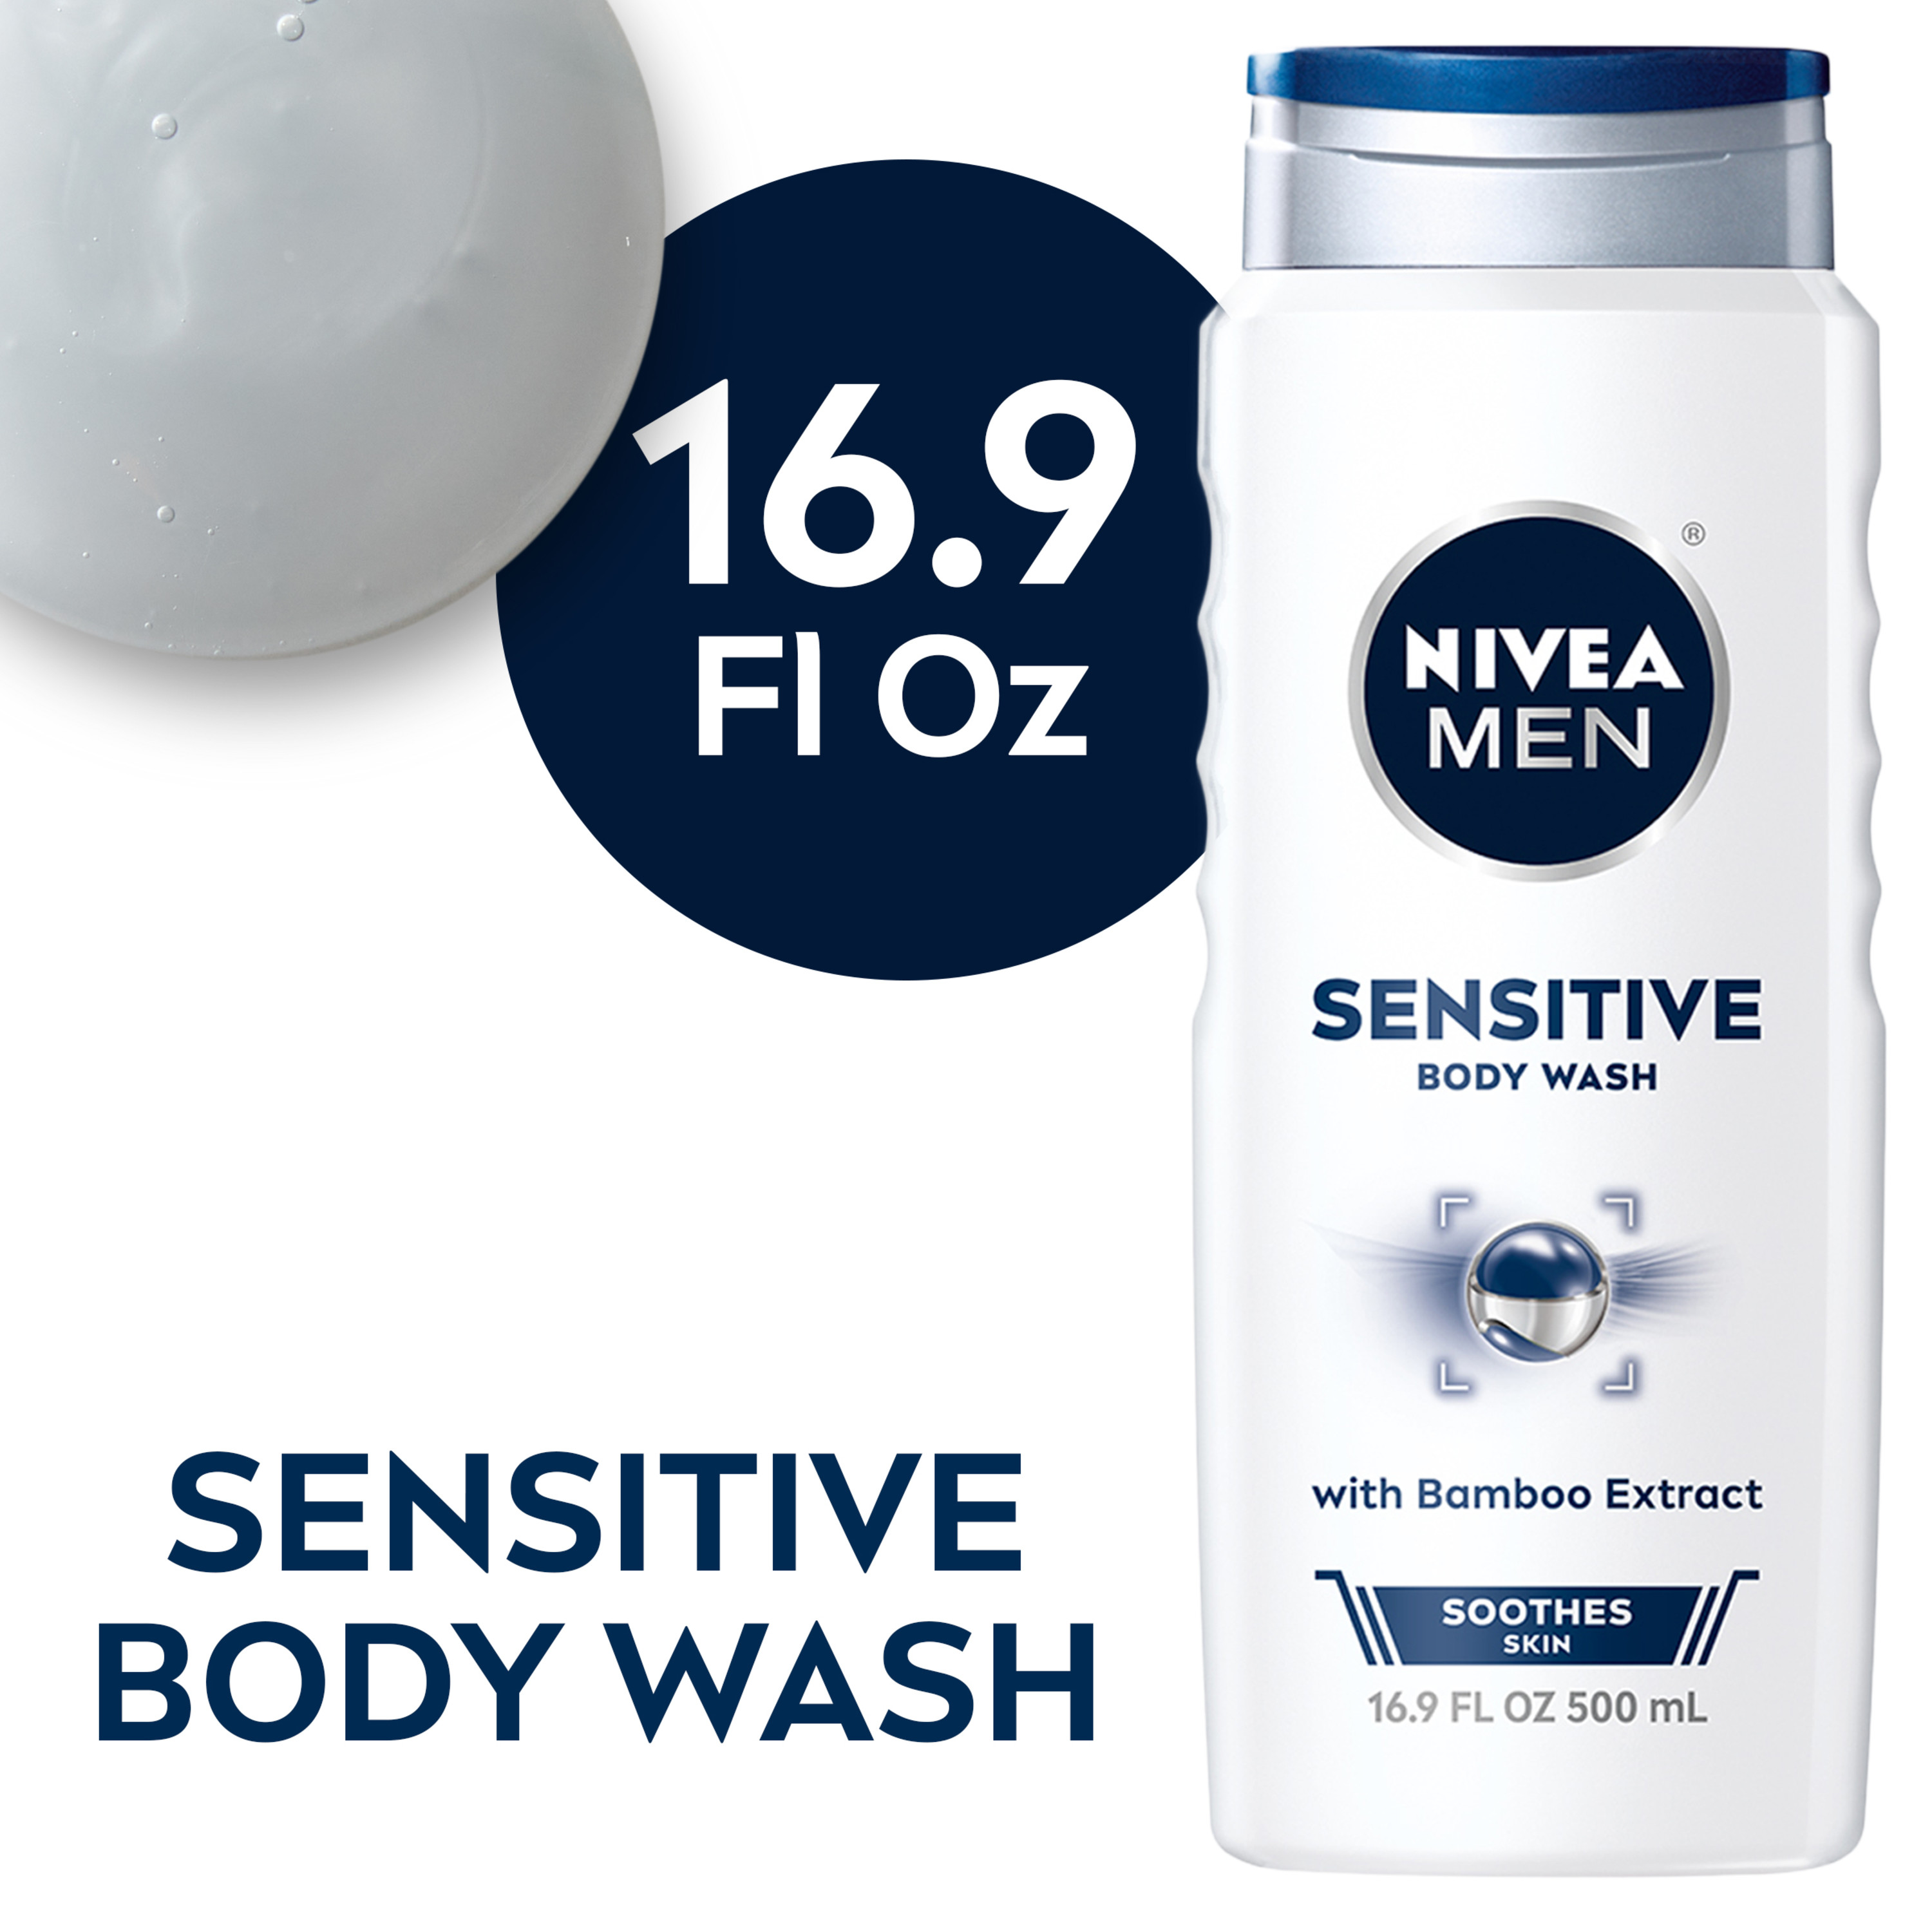 NIVEA MEN Sensitive Body Wash with Bamboo Extract, 16.9 Fl Oz Bottle - image 1 of 13